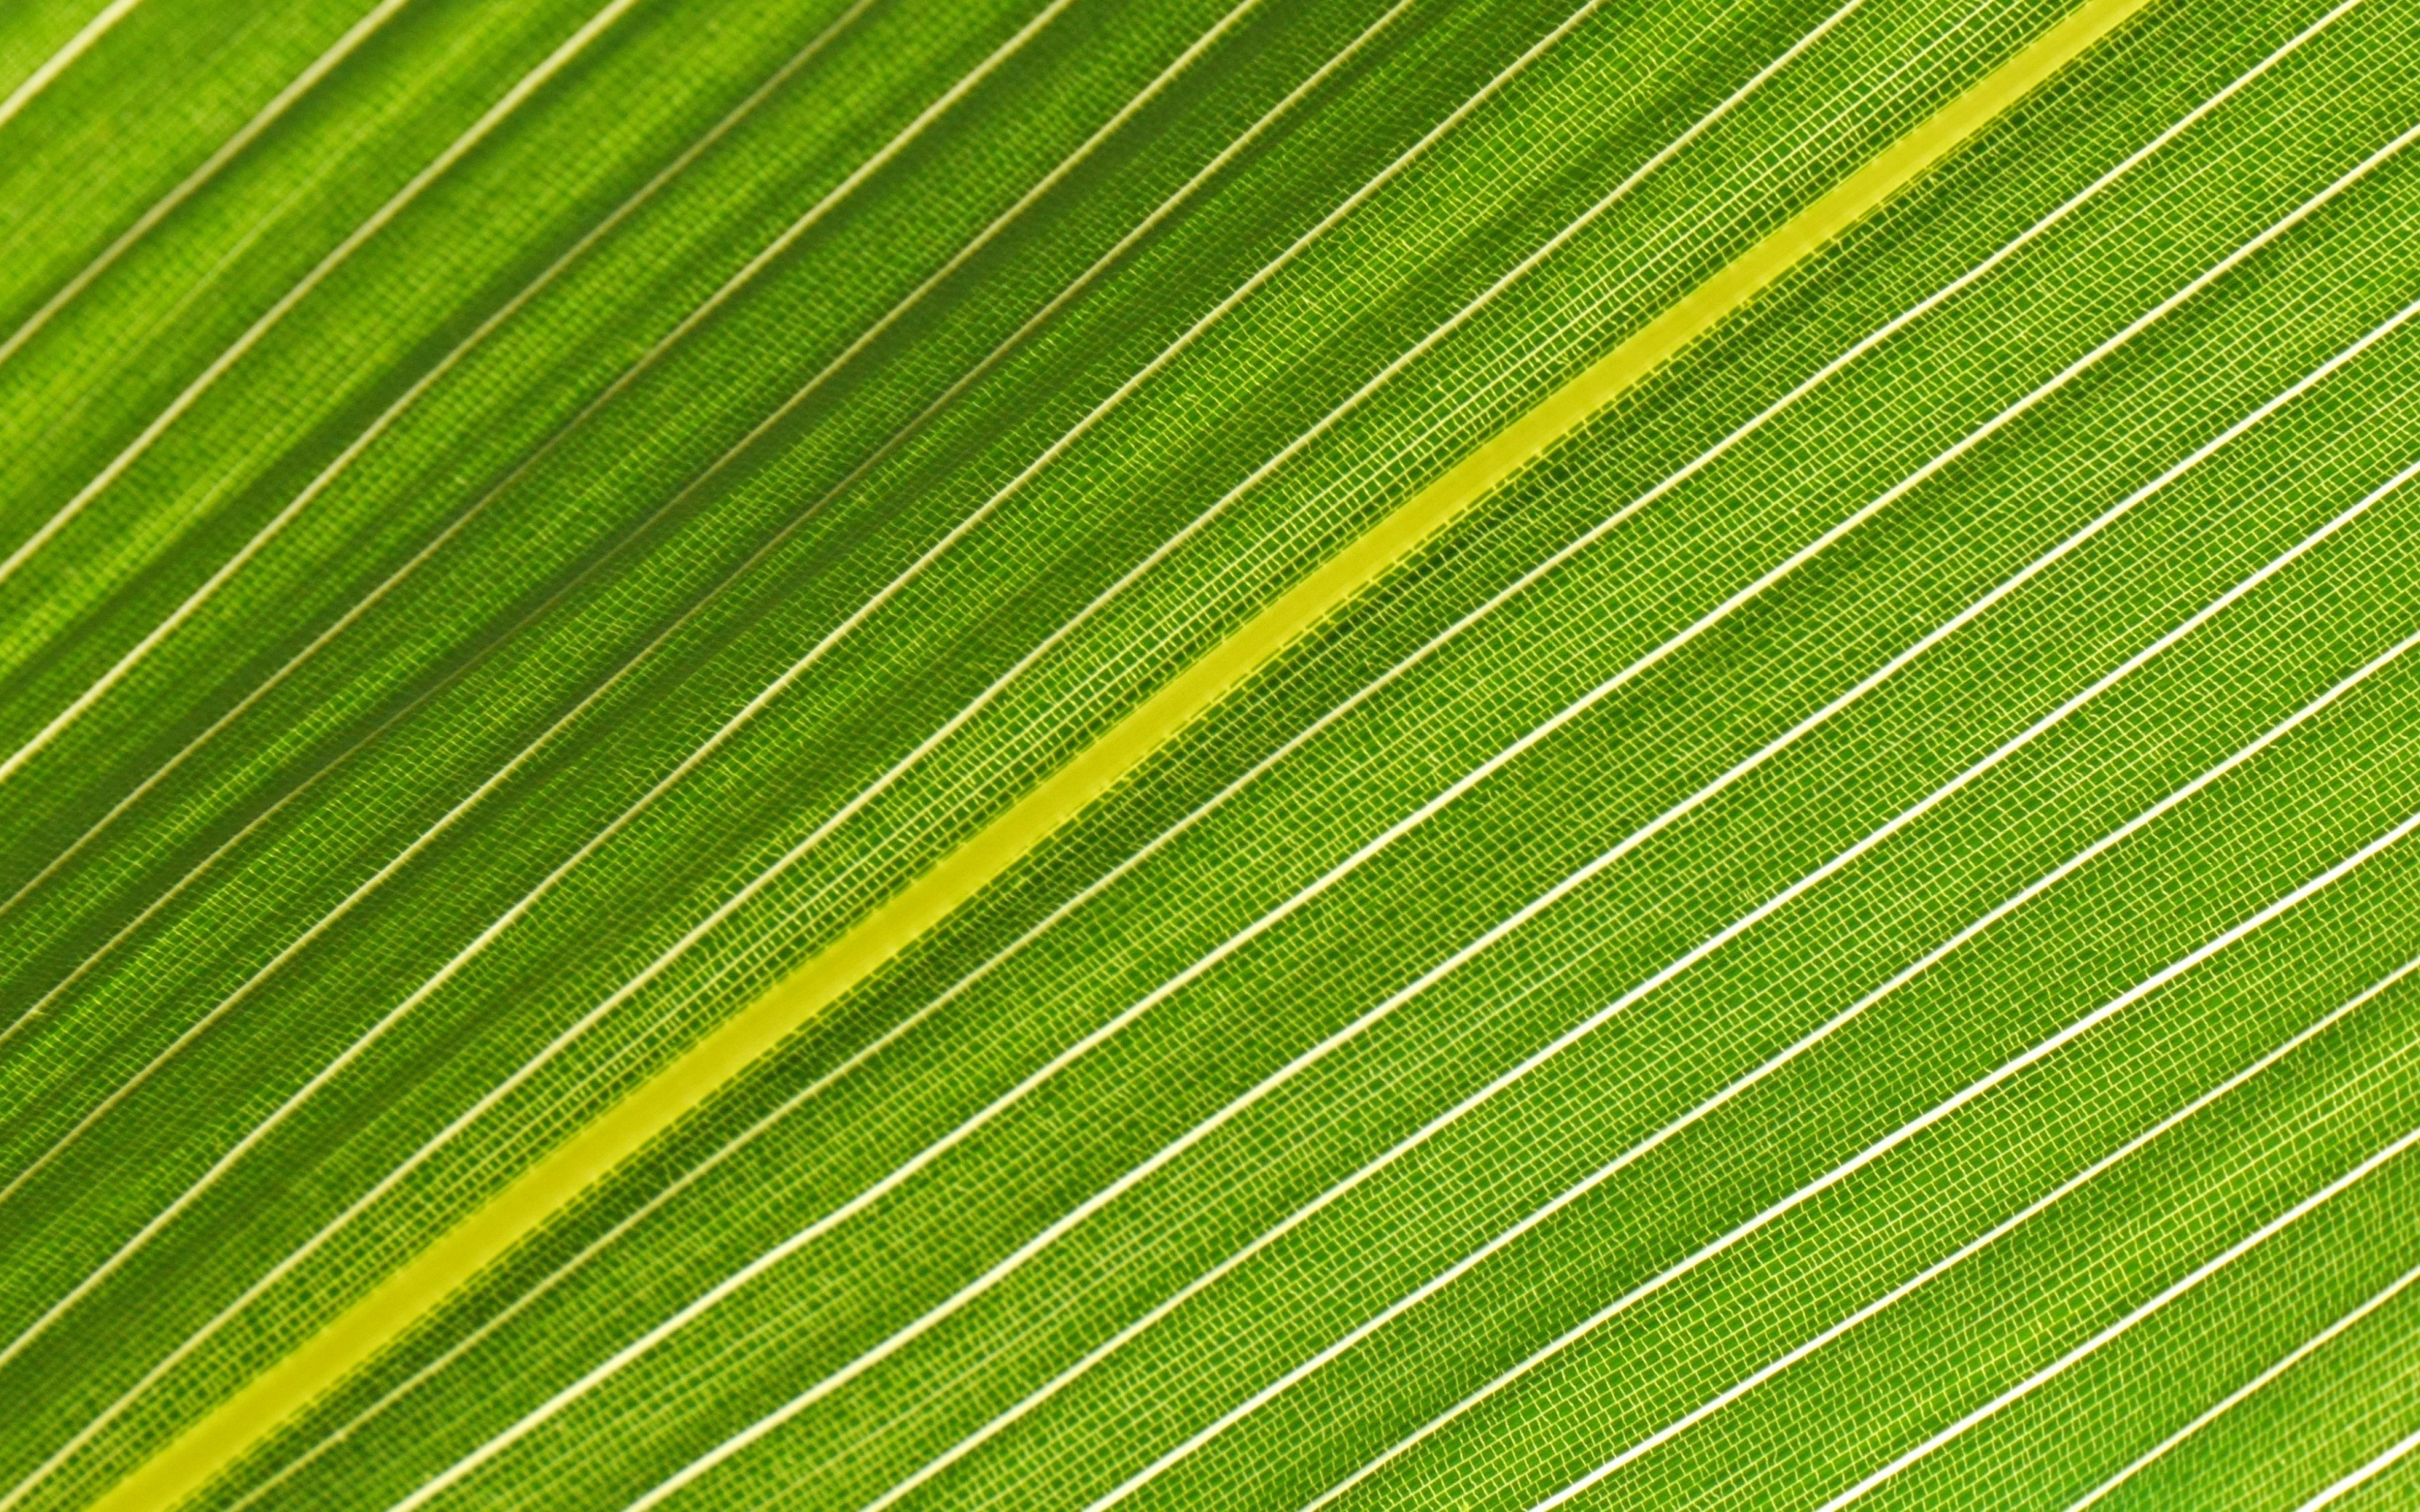 Veins of green leaf, close up, 2880x1800 wallpaper